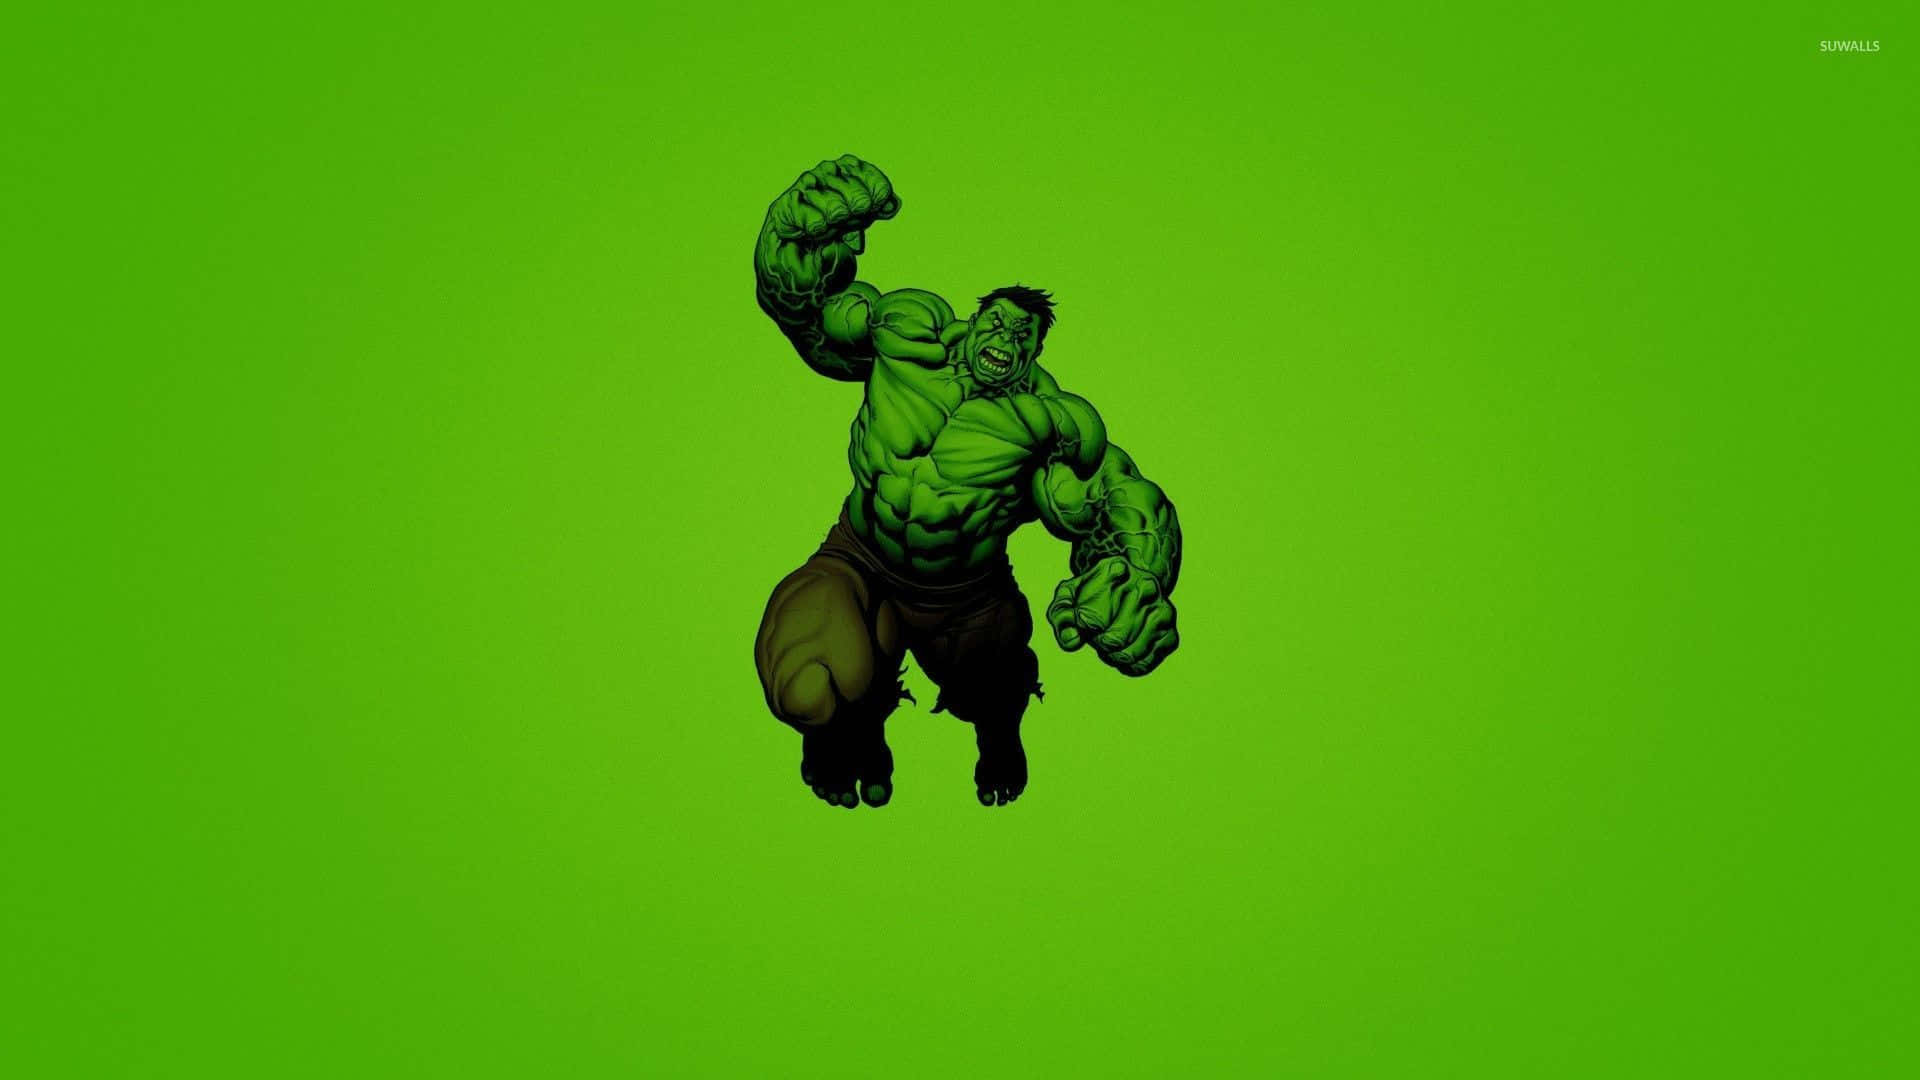 Hulk, the powerful Marvel hero